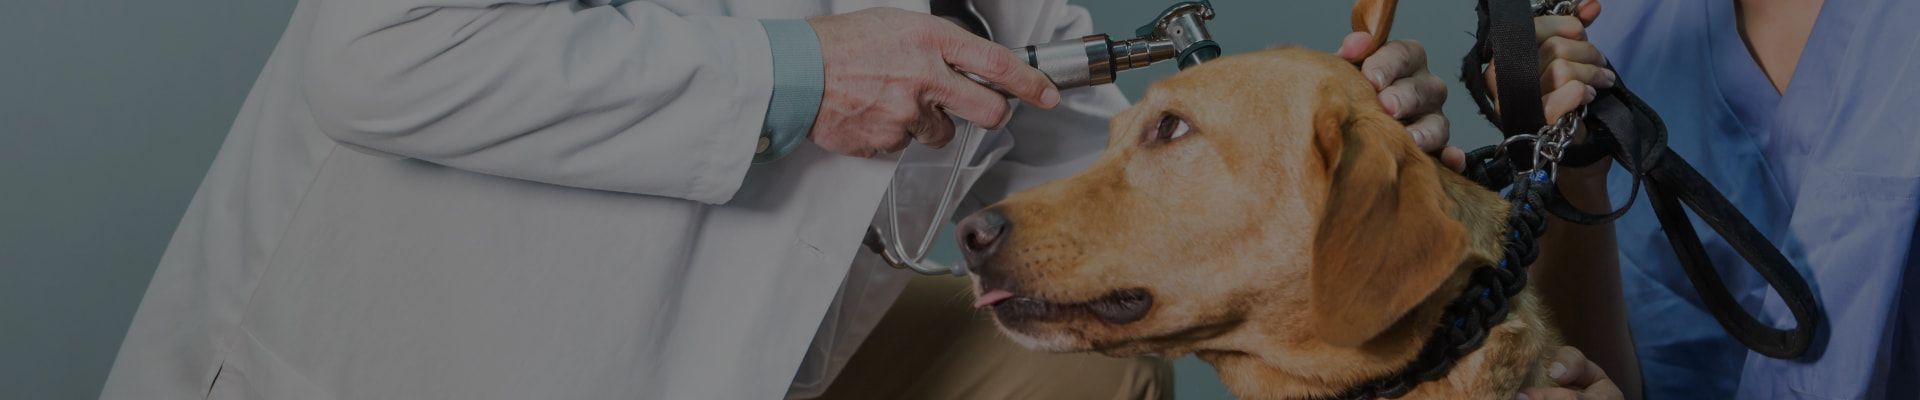 Doctors examining dog's head